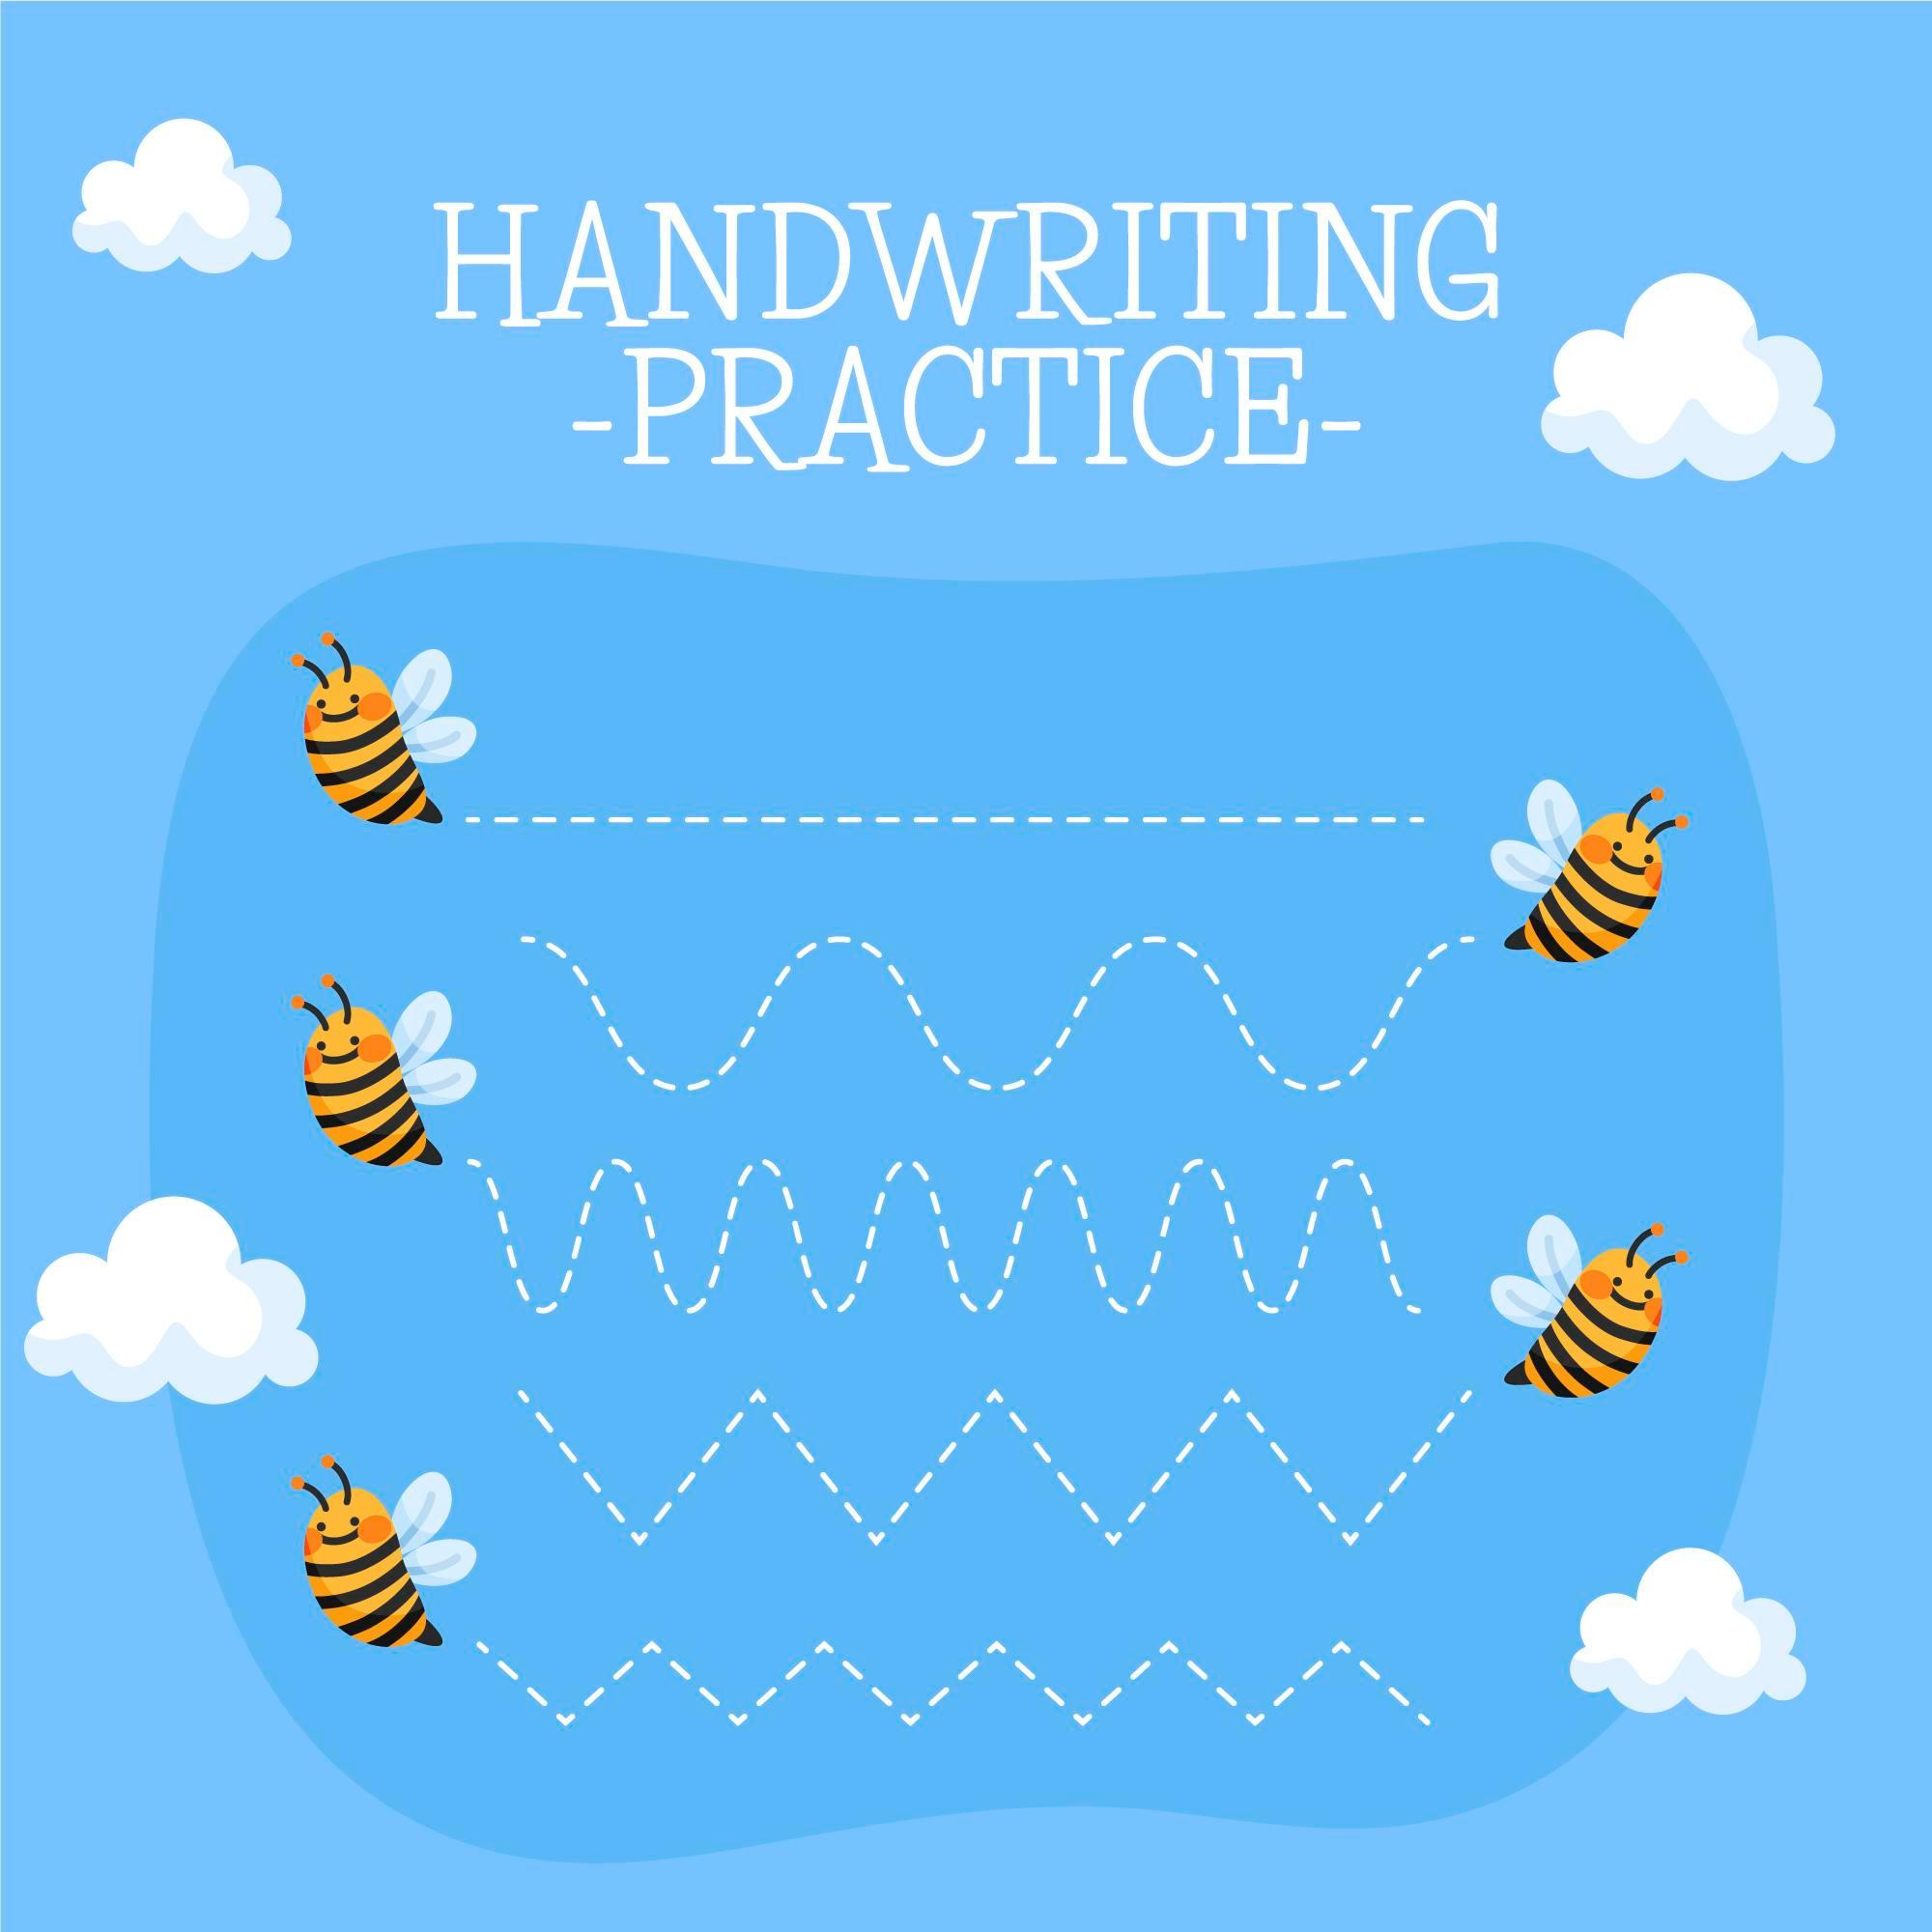 Handwriting practice worksheet with bees